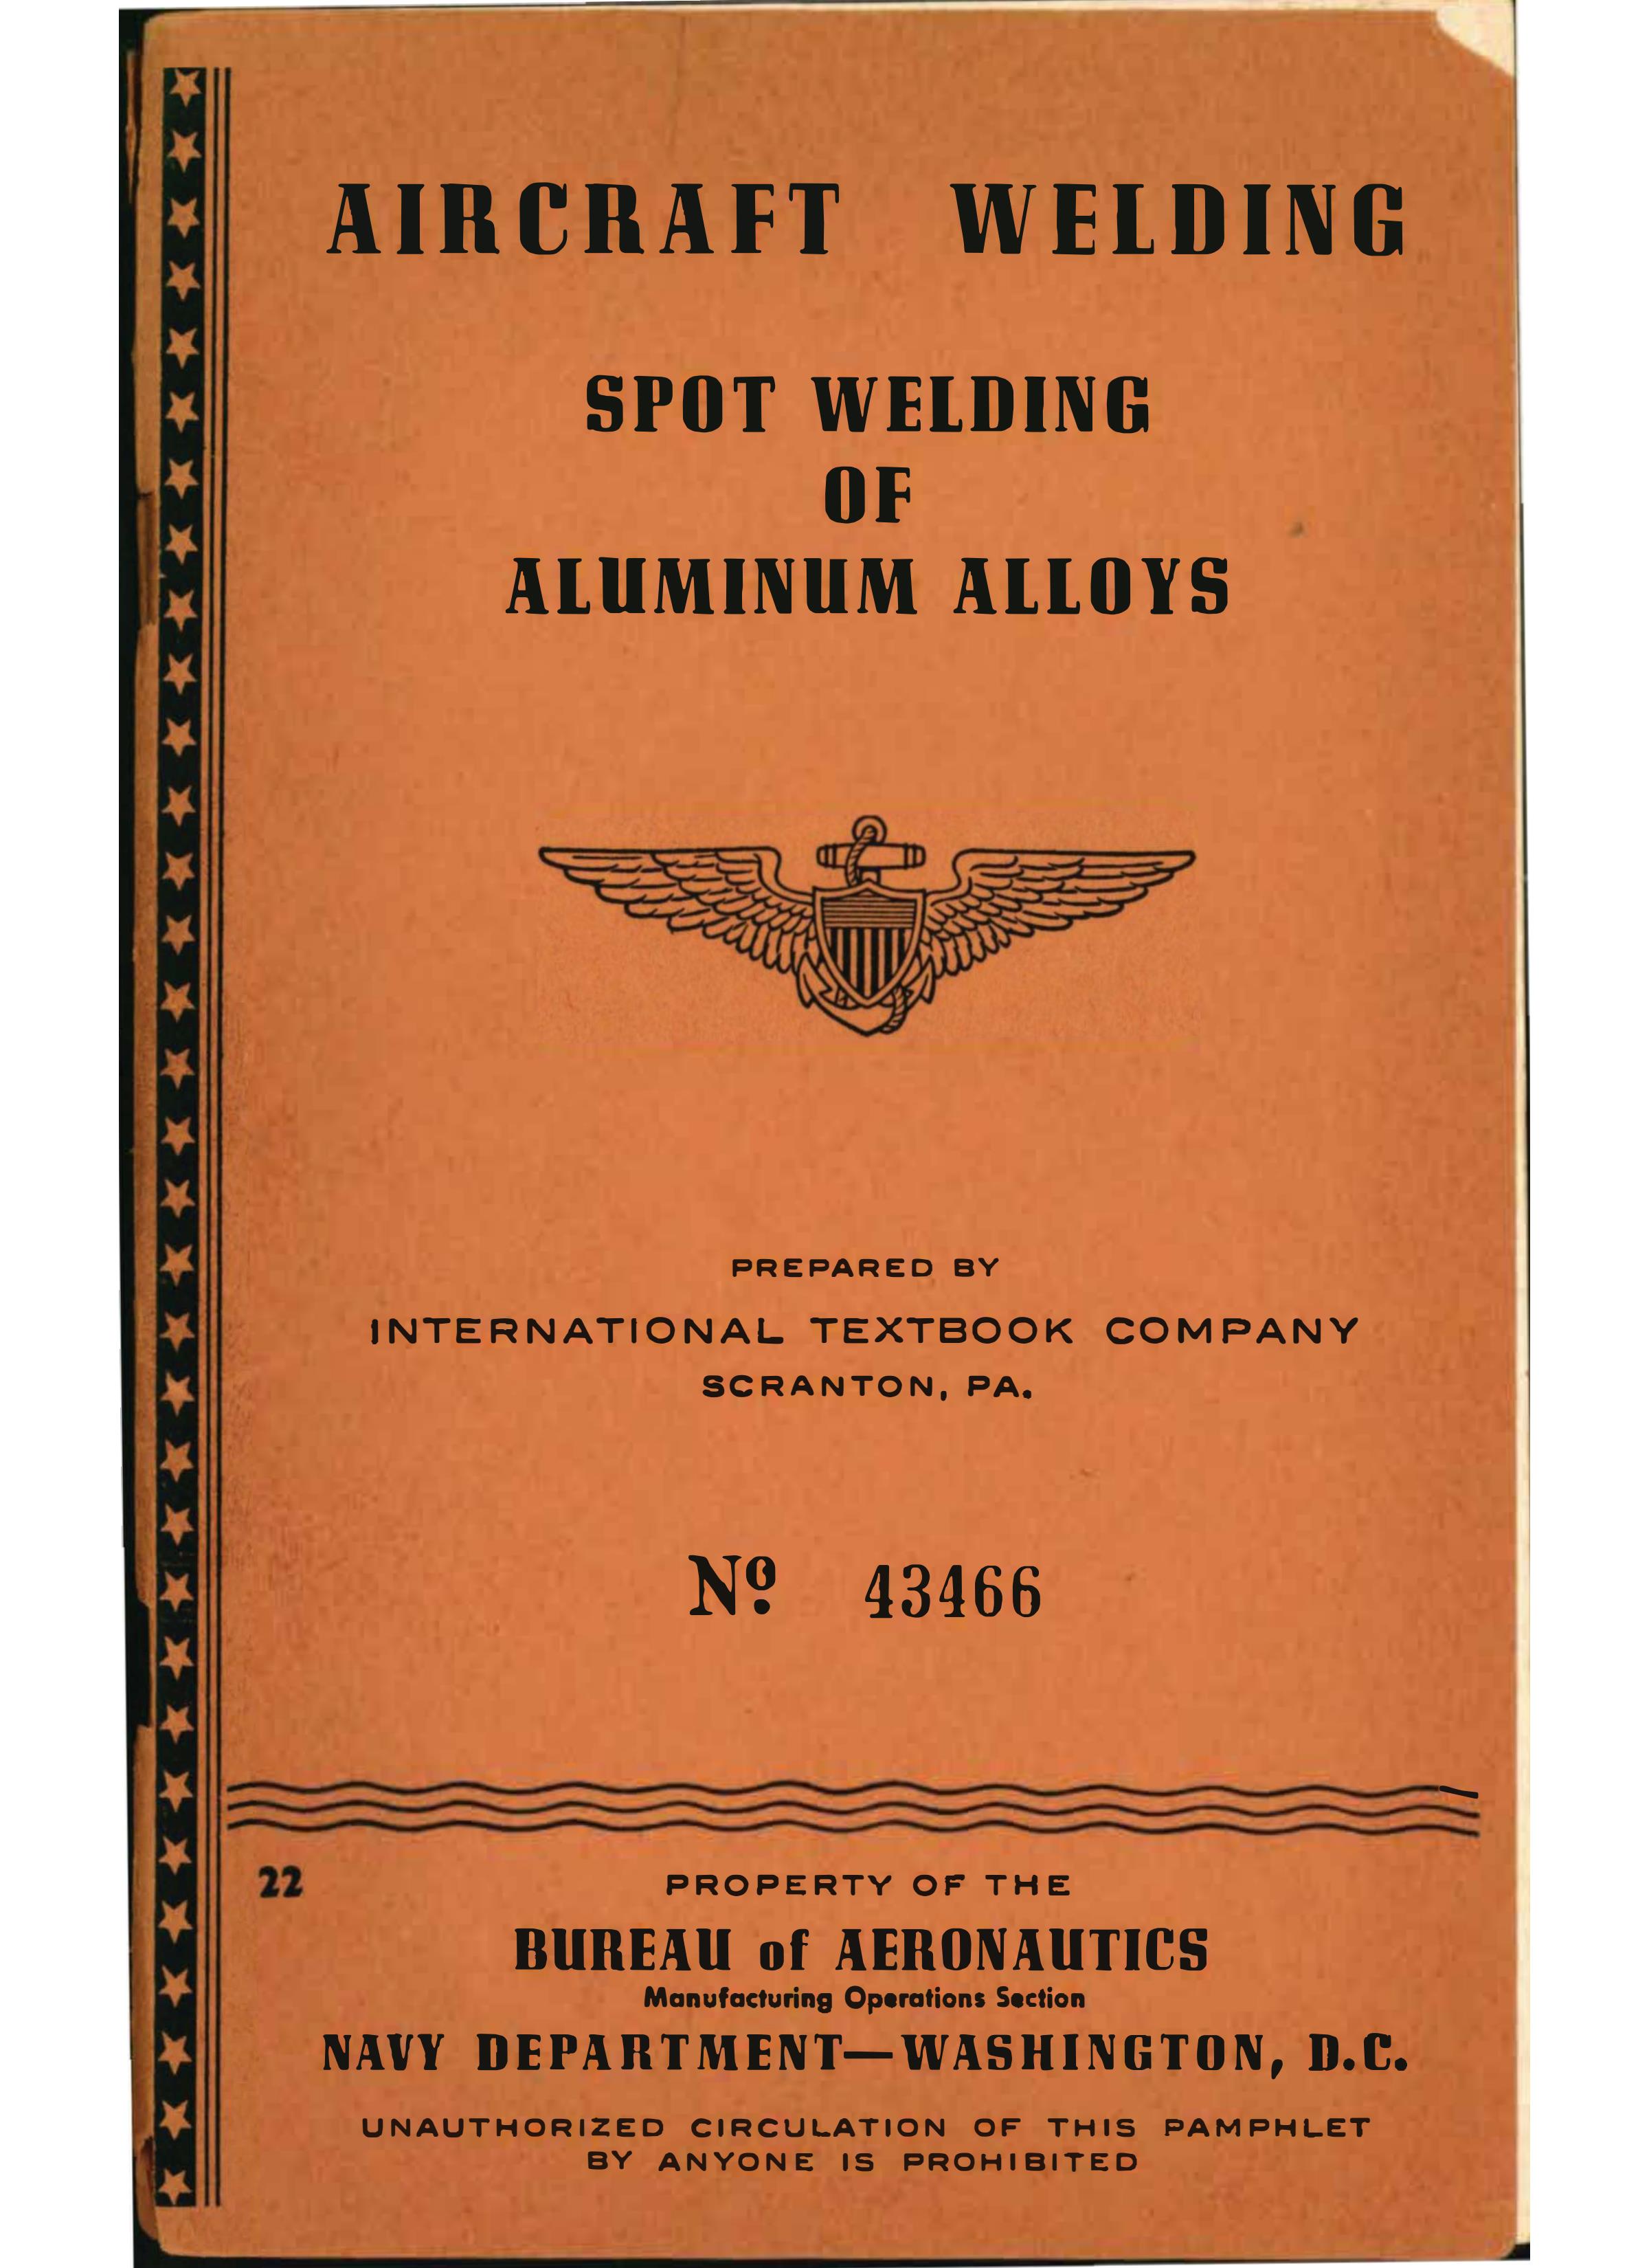 Sample page 1 from AirCorps Library document: Aircraft Welding - Spot Welding of Aluminum Alloys - Bureau of Aeronautics